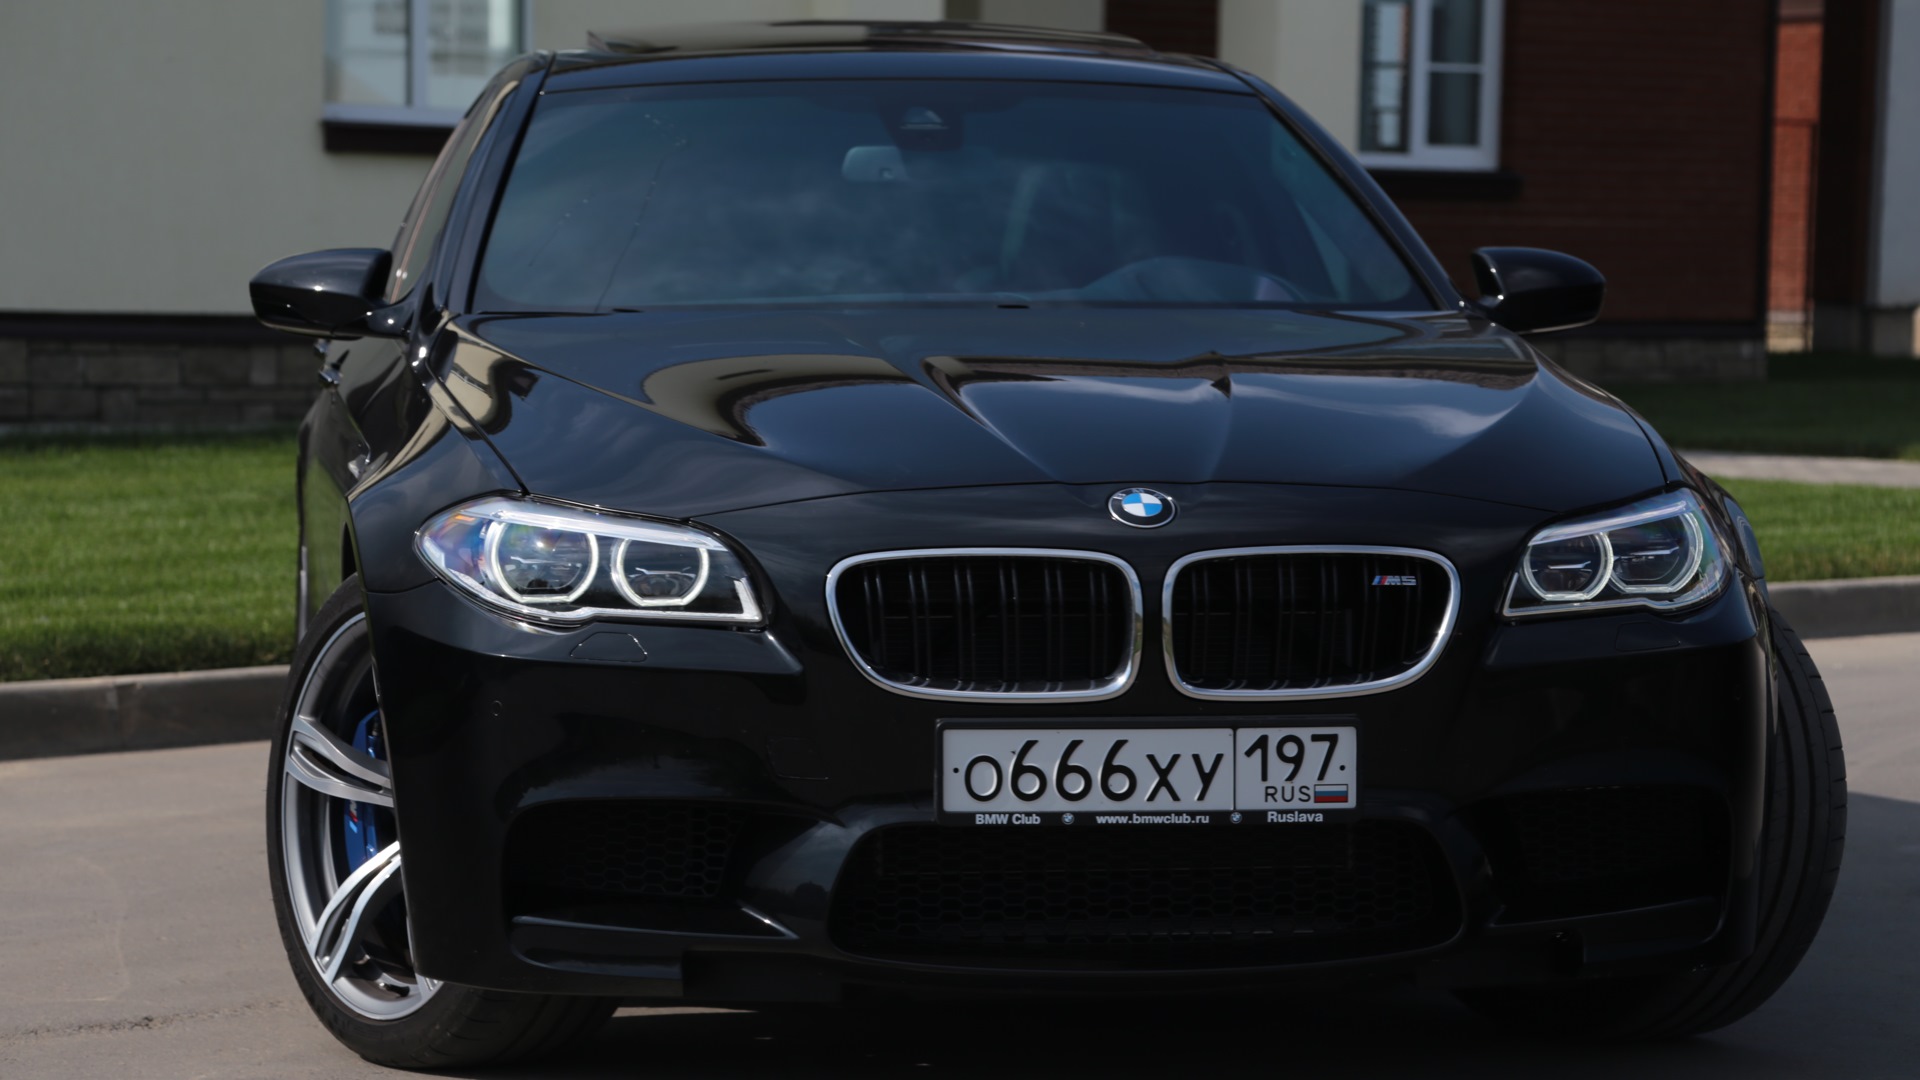 Бмв м5 москва. BMW m5 f10. BMW m5 f10 Black. BMW m5 f10 черная. БМВ м5 777.